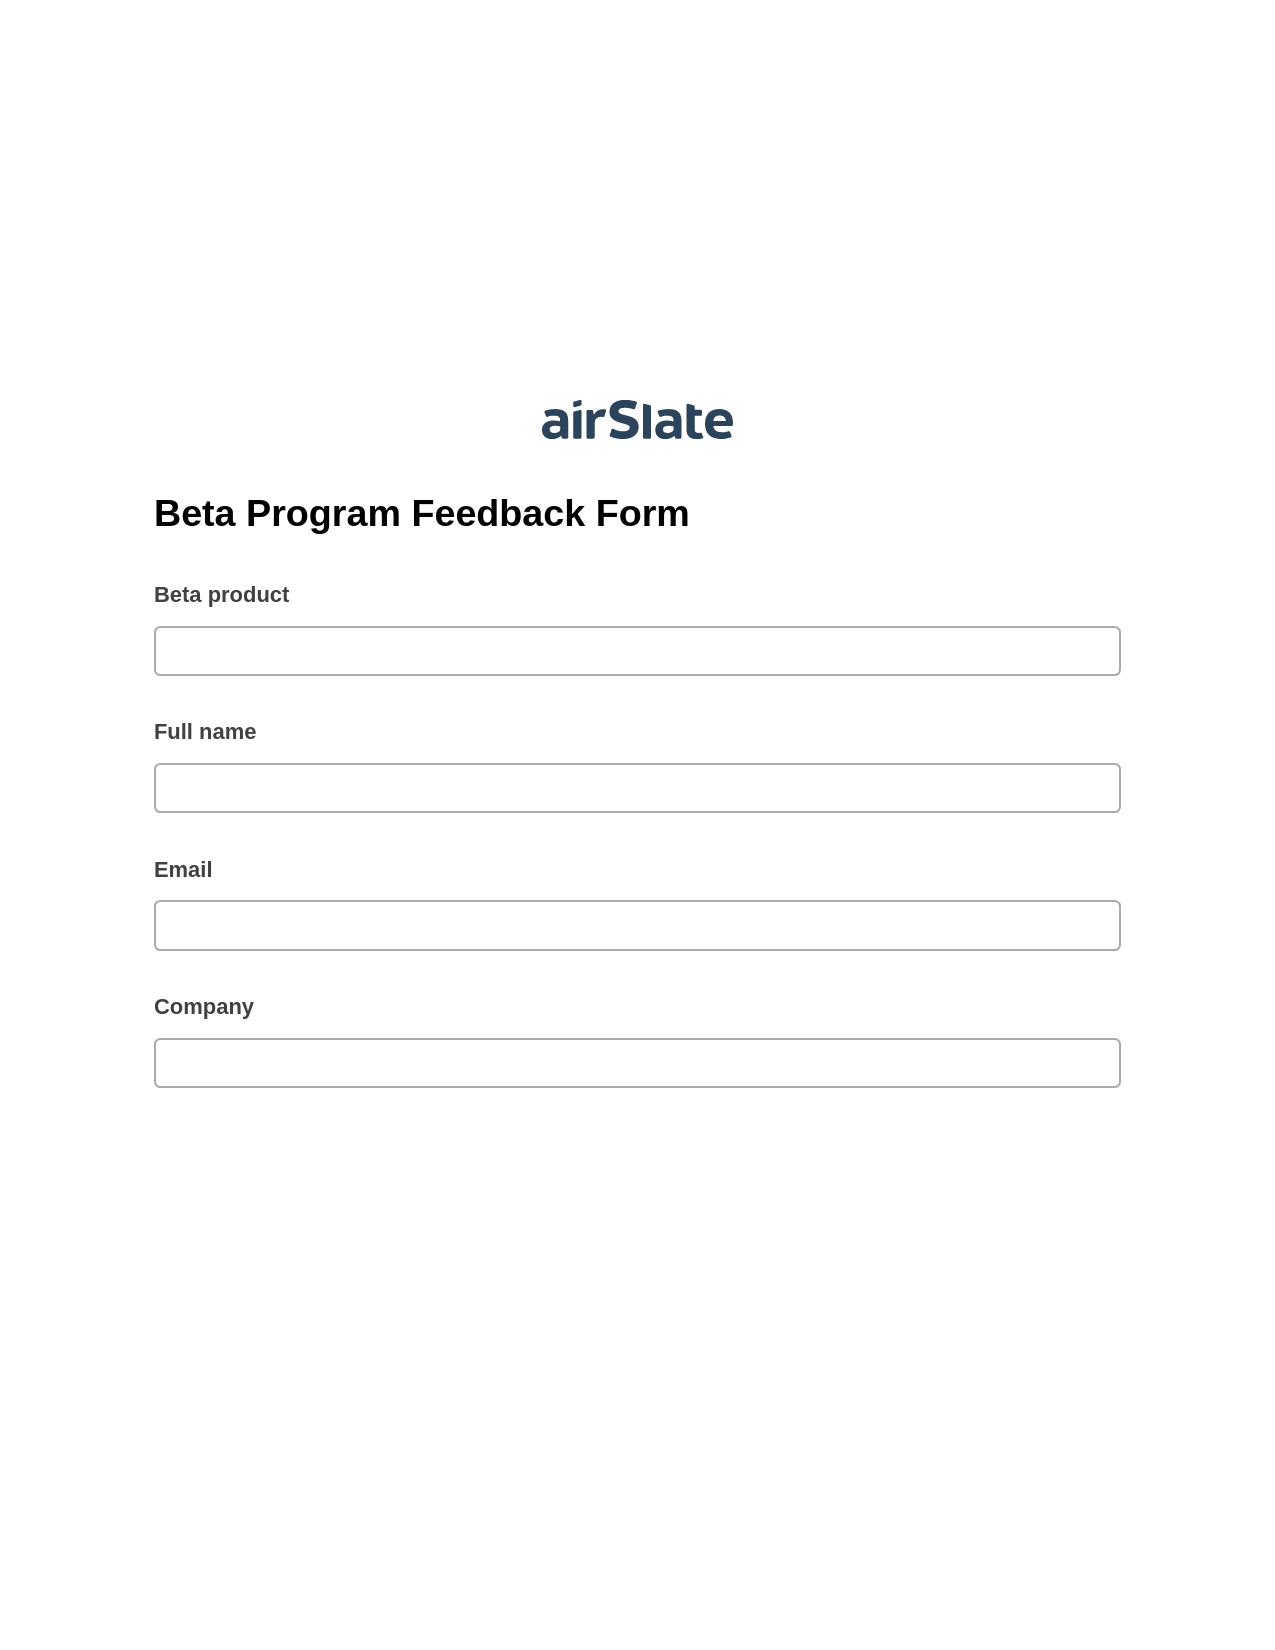 Multirole Beta Program Feedback Form Pre-fill from Google Sheets Bot, Assign Slate Name Bot, Post-finish Document Bot